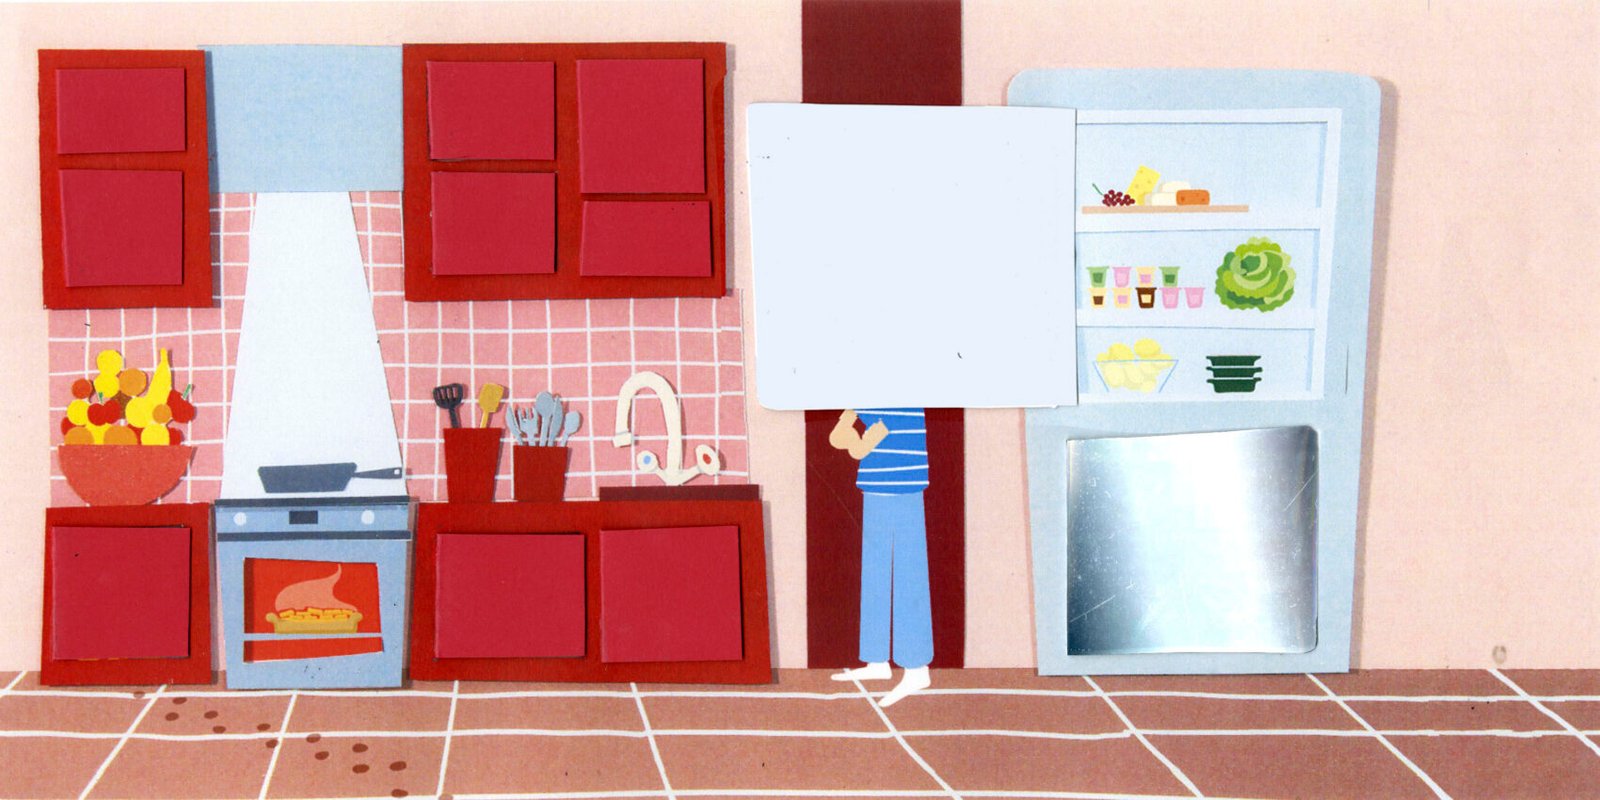 Illustration jeunesse : Billy cherche doudou lapin dans la cuisine. Valentine CHOQUET illustrations | illustratrice freelance